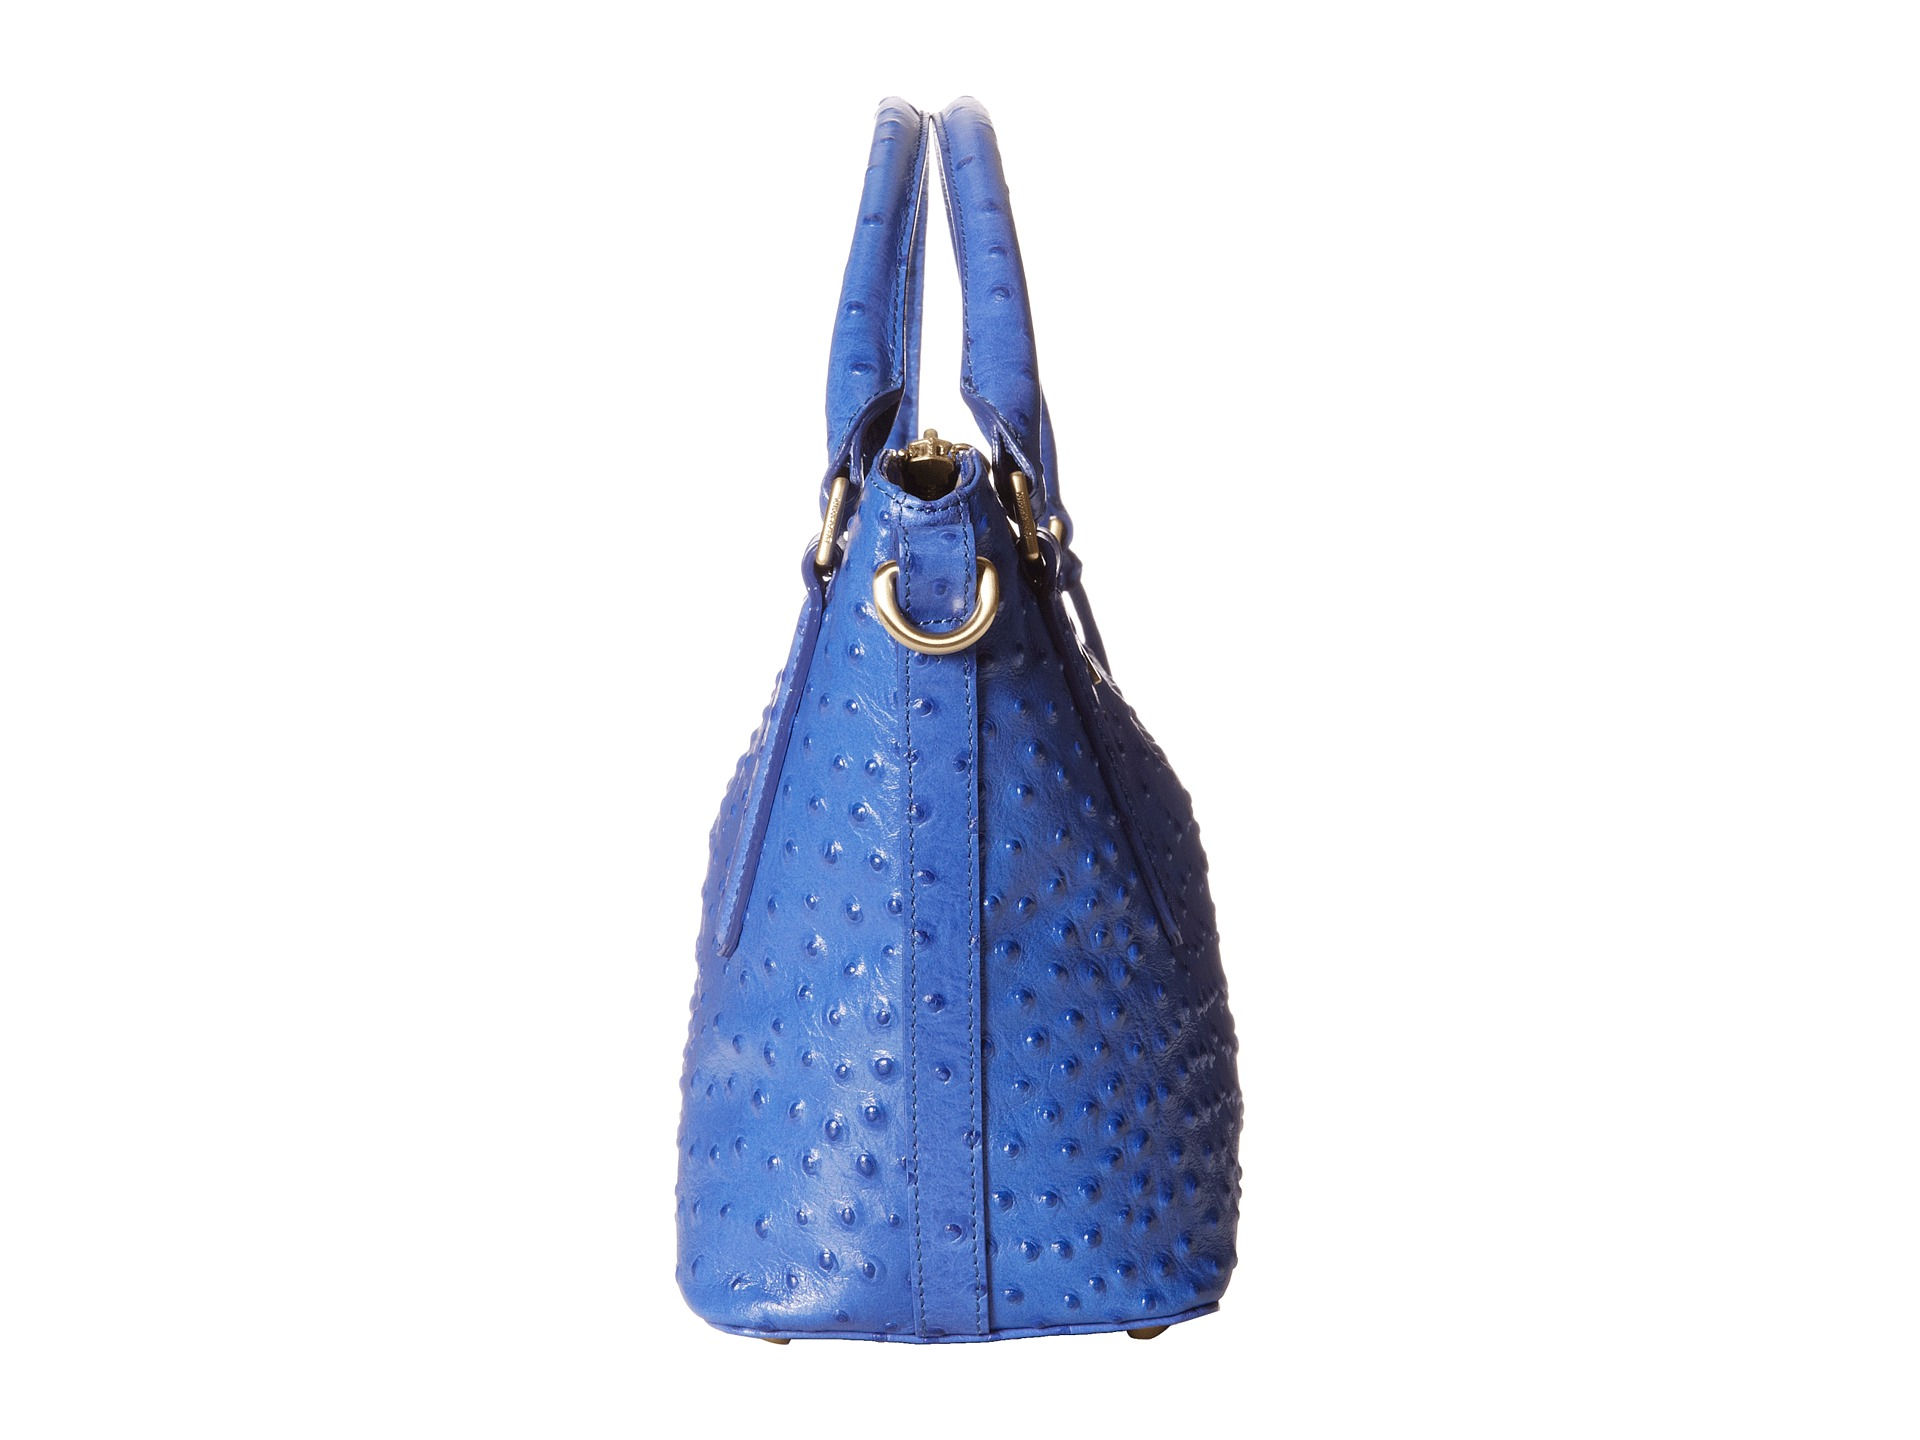 Brahmin+Small+Irene+Satchel+Maritime+Blue+Leather+Crossbody+Bag+Wallet+*HTF  for sale online